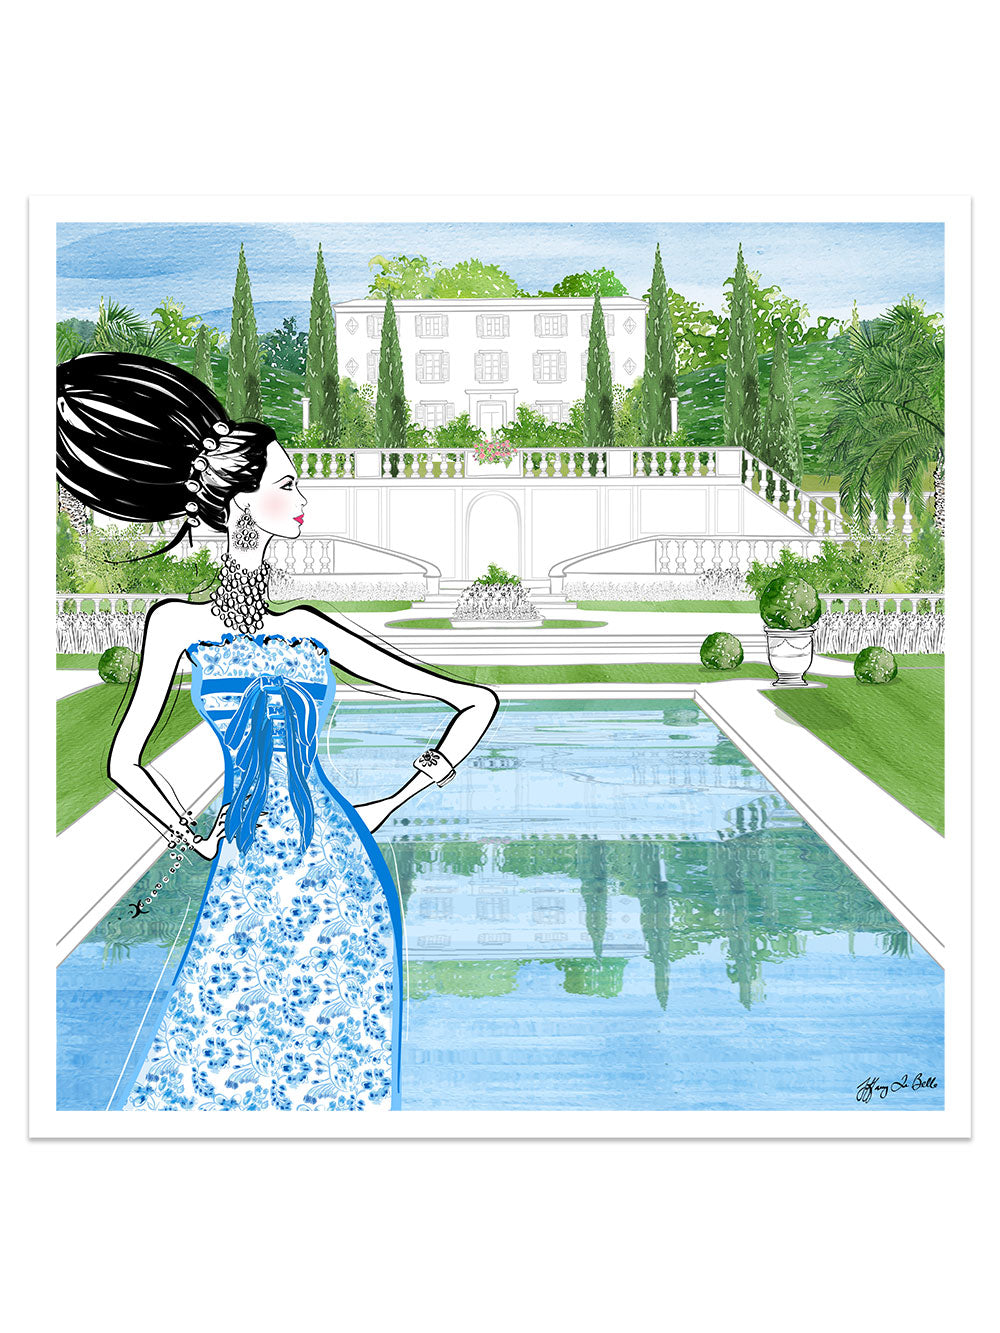 Chanel Haute Couture Spring - Illustration - Limited Edition Print - Tiffany La Belle